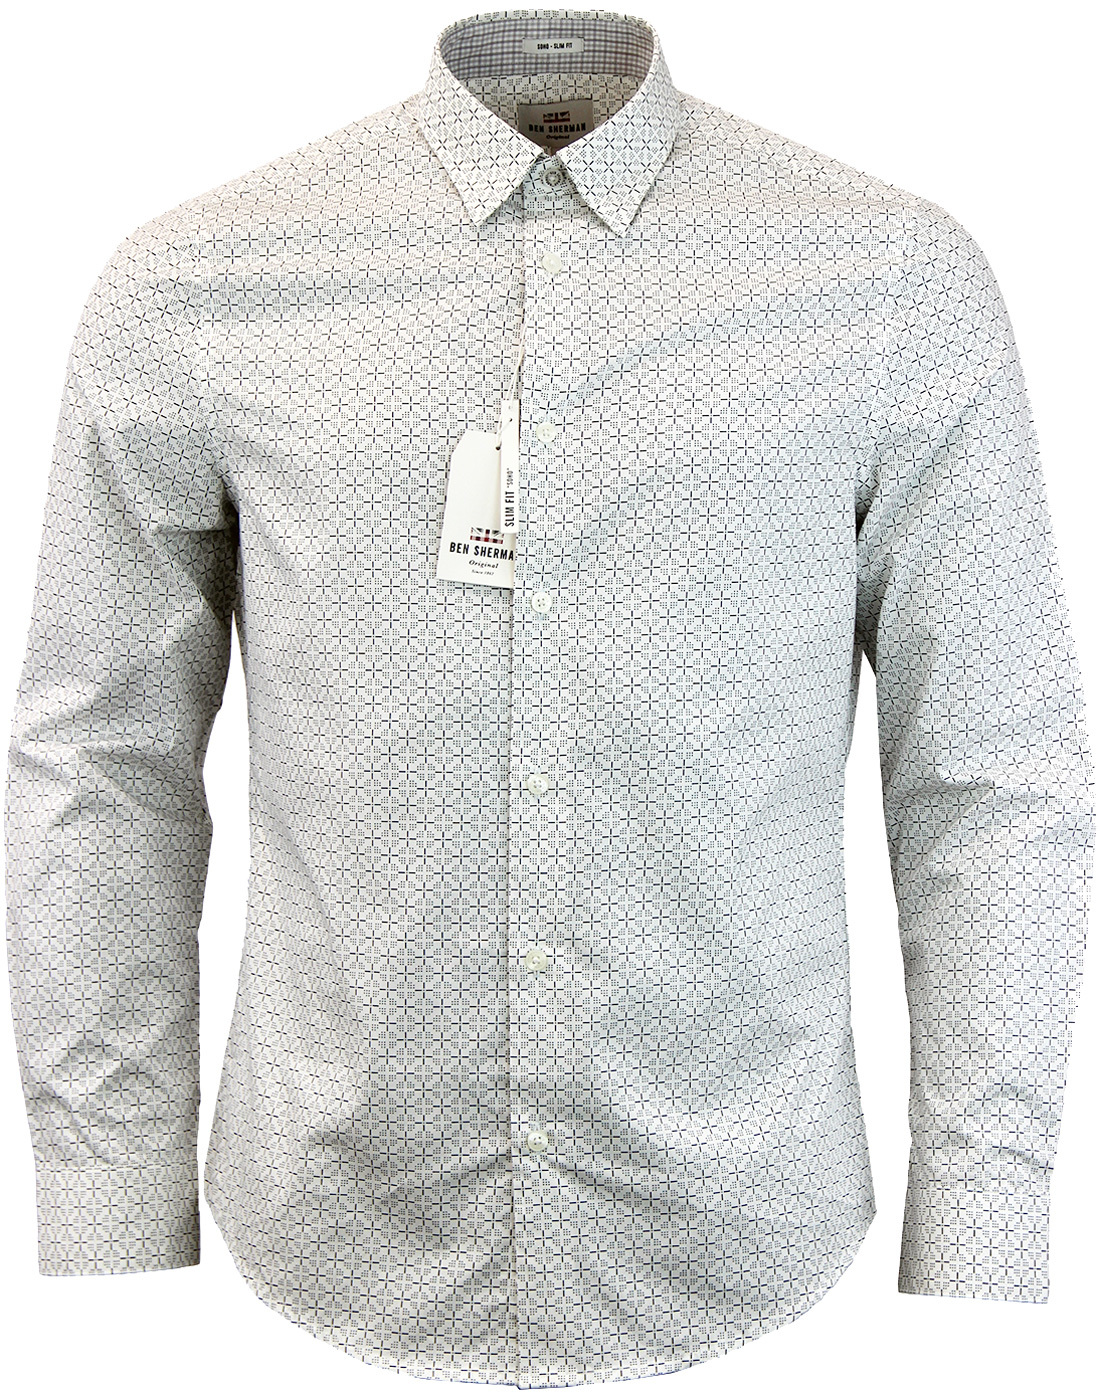 BEN SHERMAN mens Retro Optic Checker board Shirt in Bright White